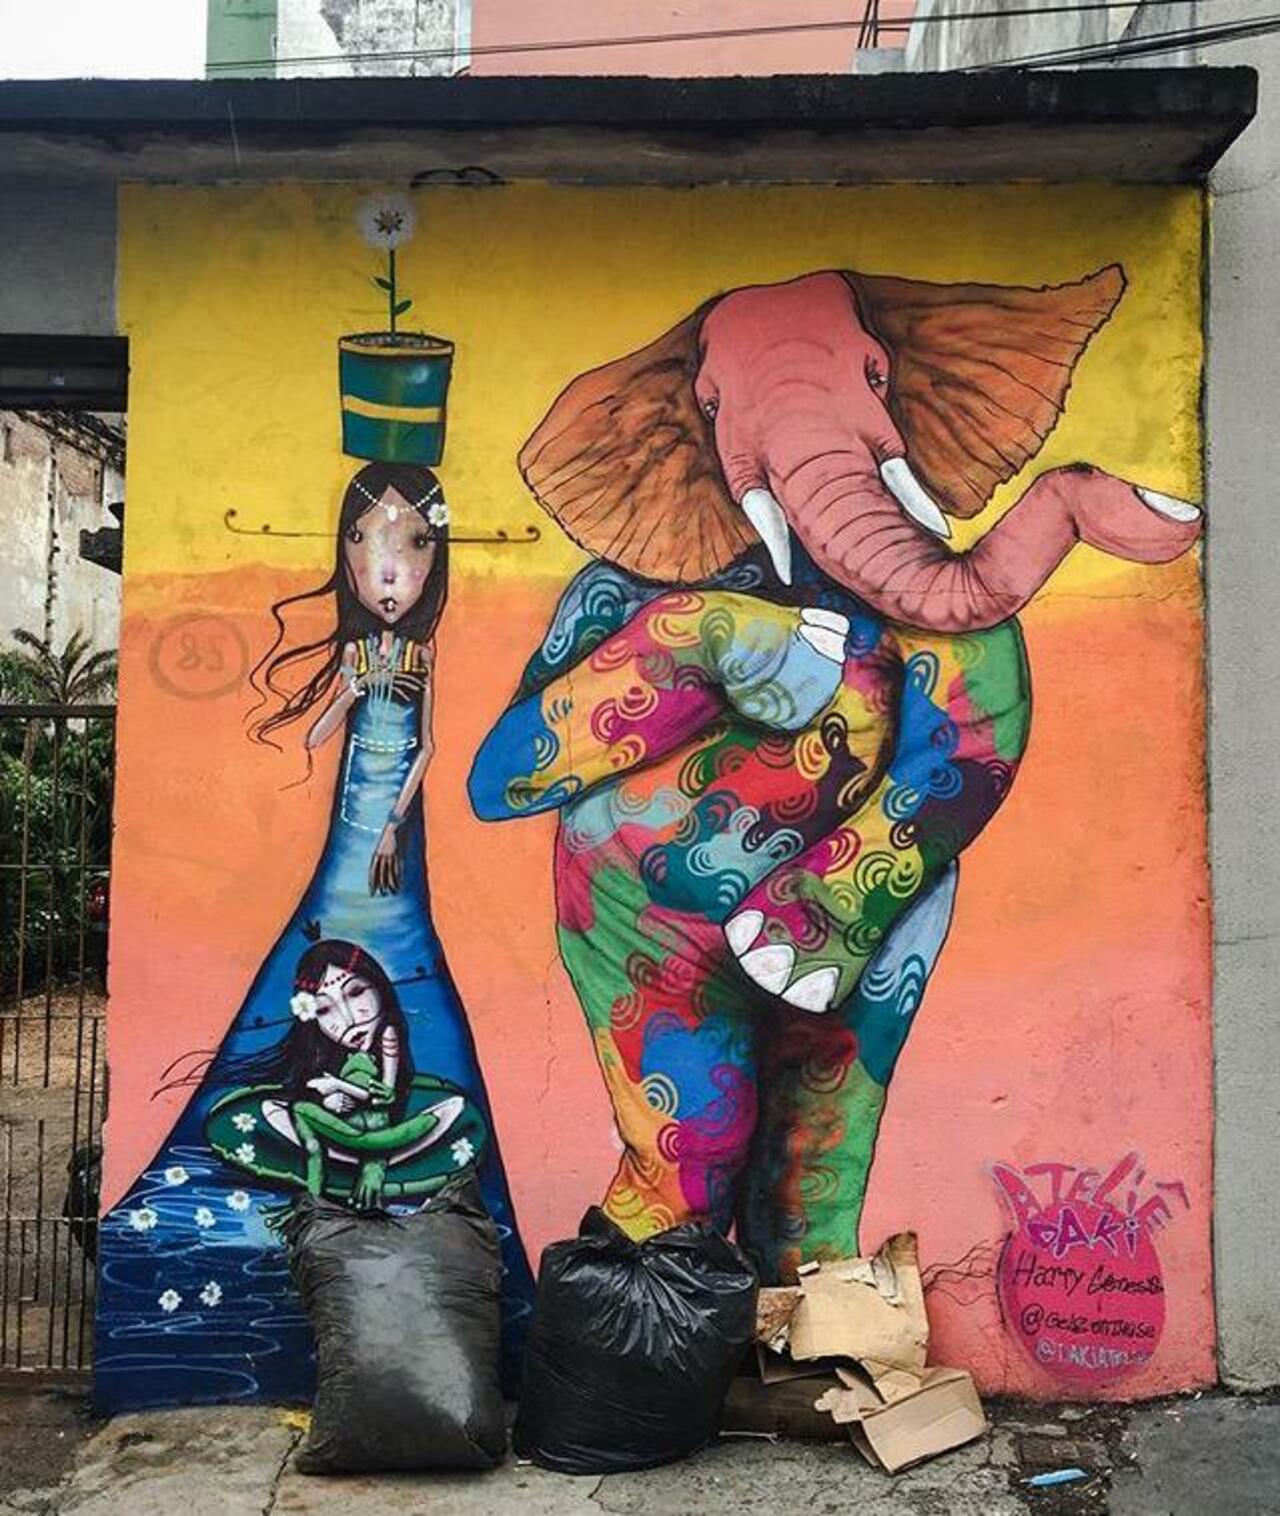 Street Art by Harry Geneis & Gelson in São Paulo #art #mural #graffiti #streetart http://t.co/SlLbhuMZfD … … …… … http://twitter.com/GoogleStreetArt/status/648016473831645184/photo/1/large?utm_source=fb&utm_medium=fb&utm_campaign=charlesjackso14&utm_content=648025221836972032